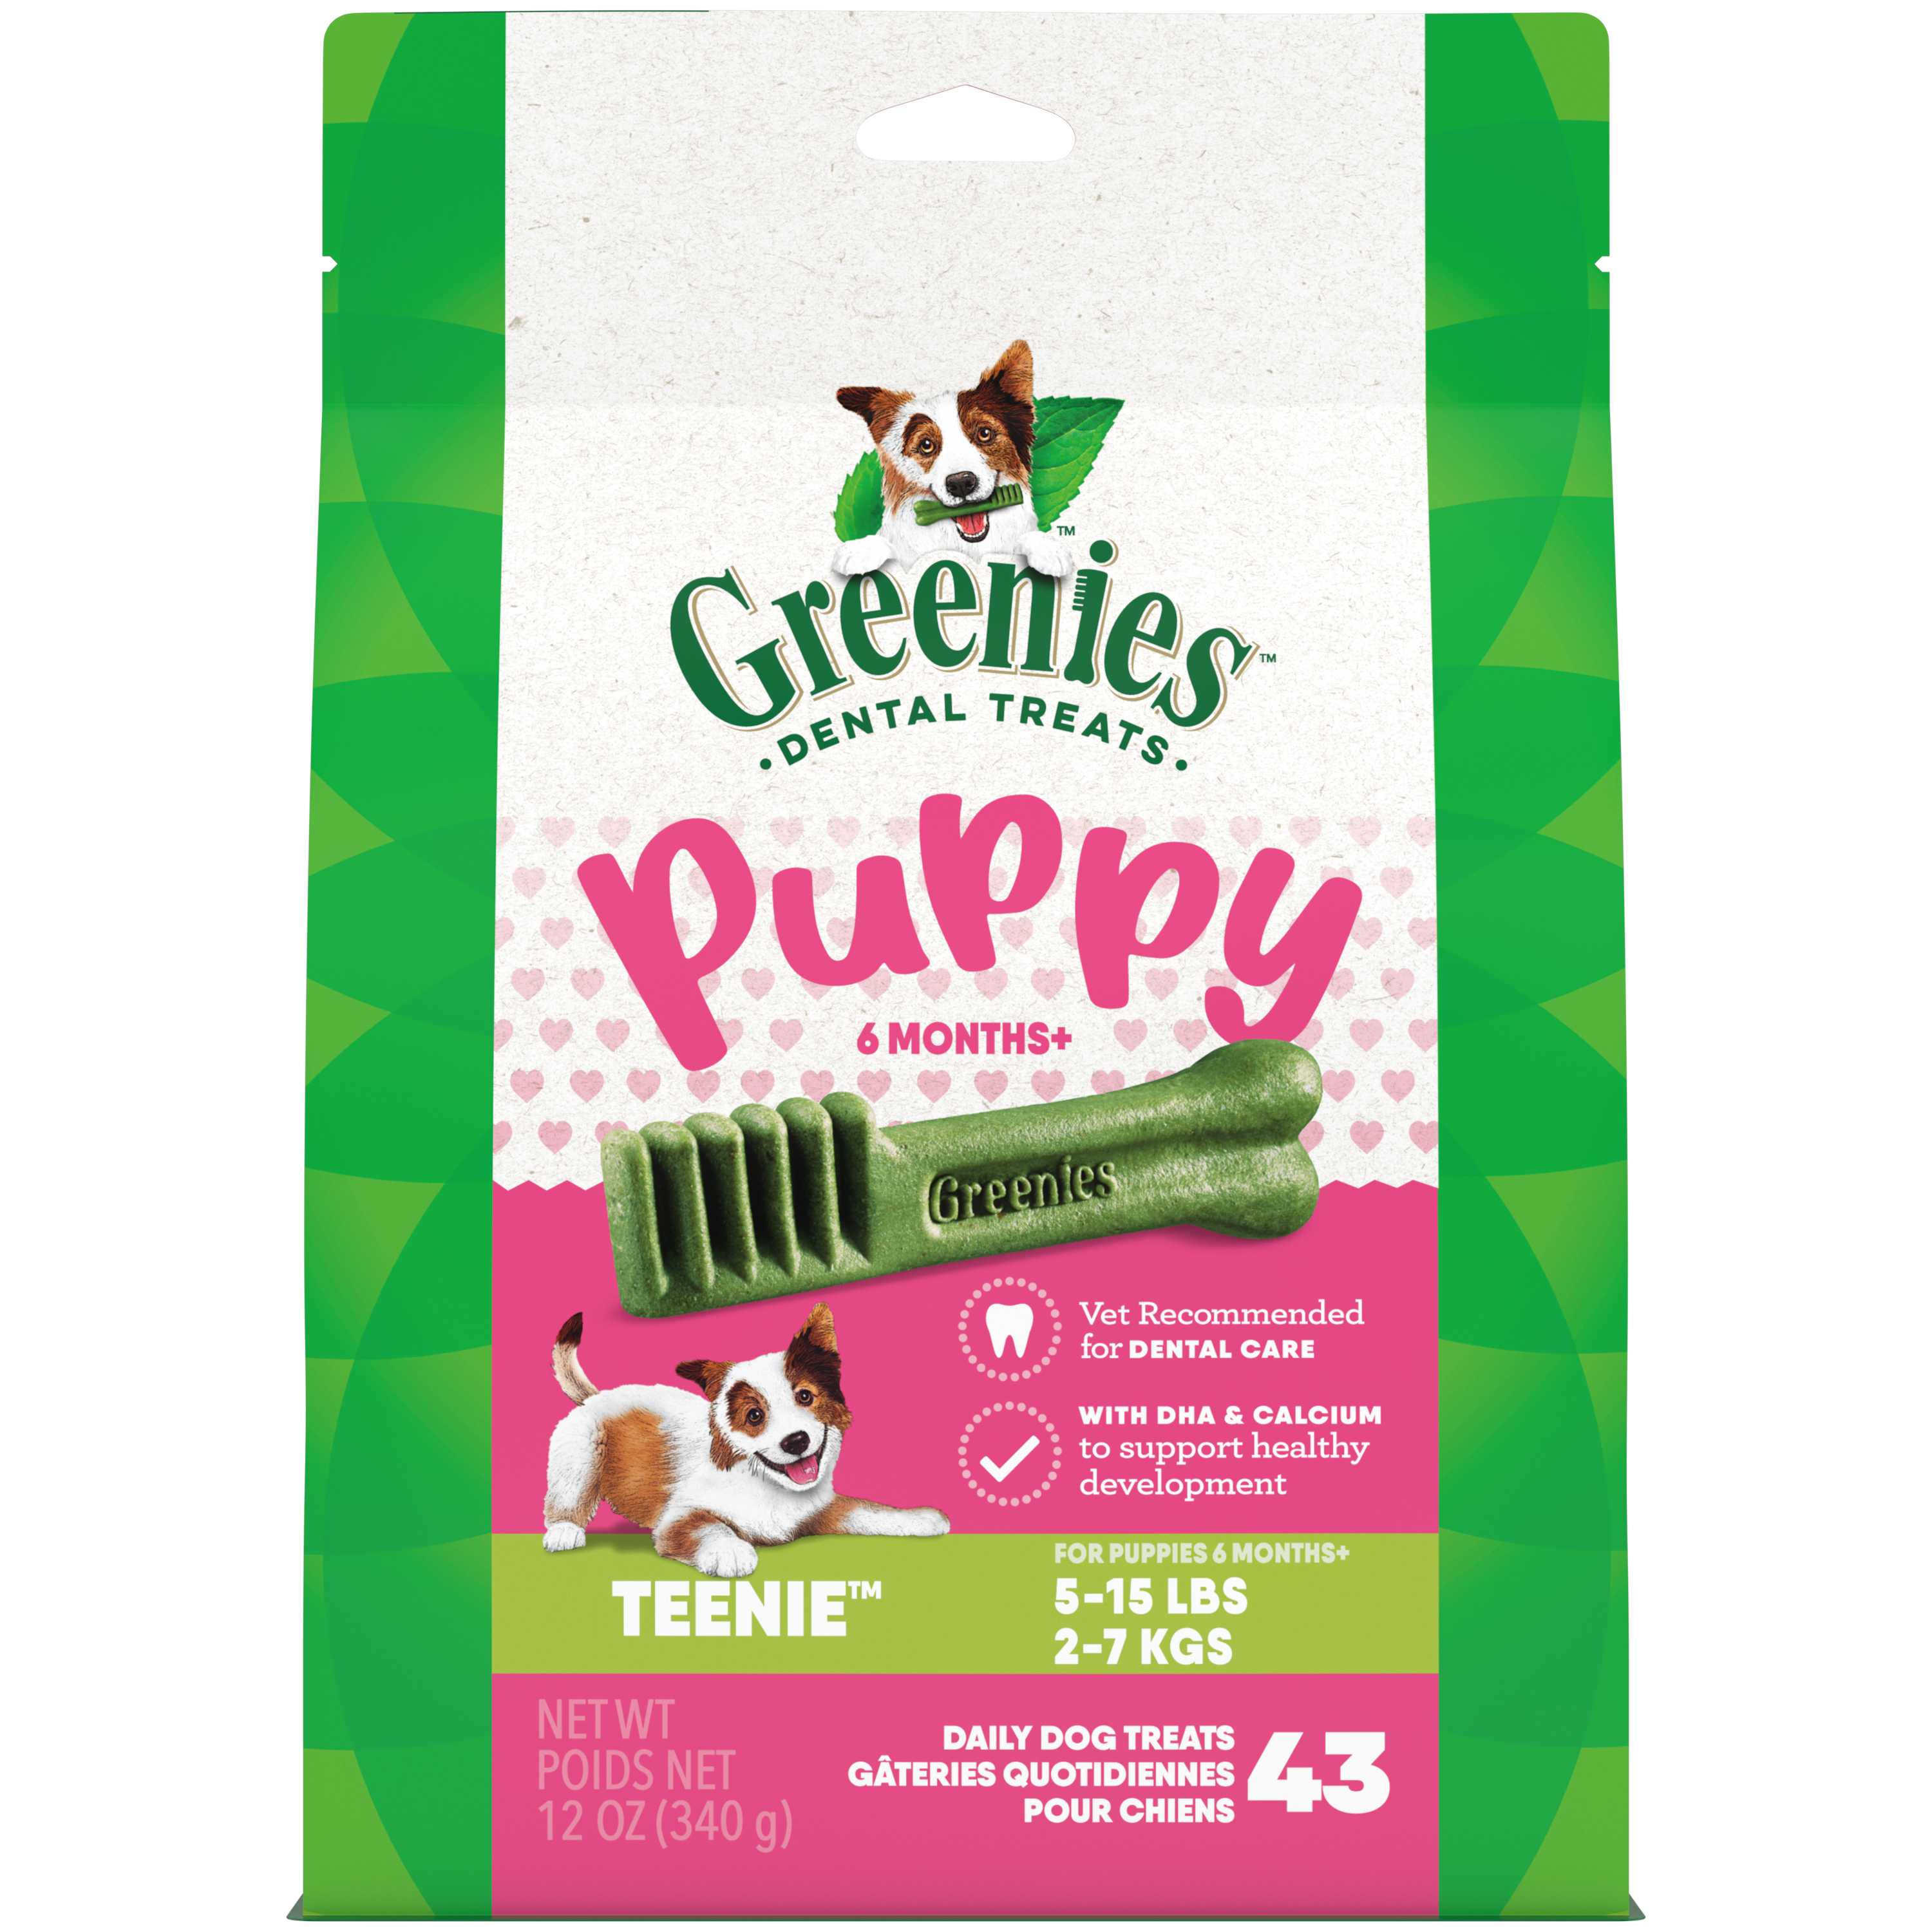 12oz Greenies PUPPY Teenie Treat Pack - Health/First Aid